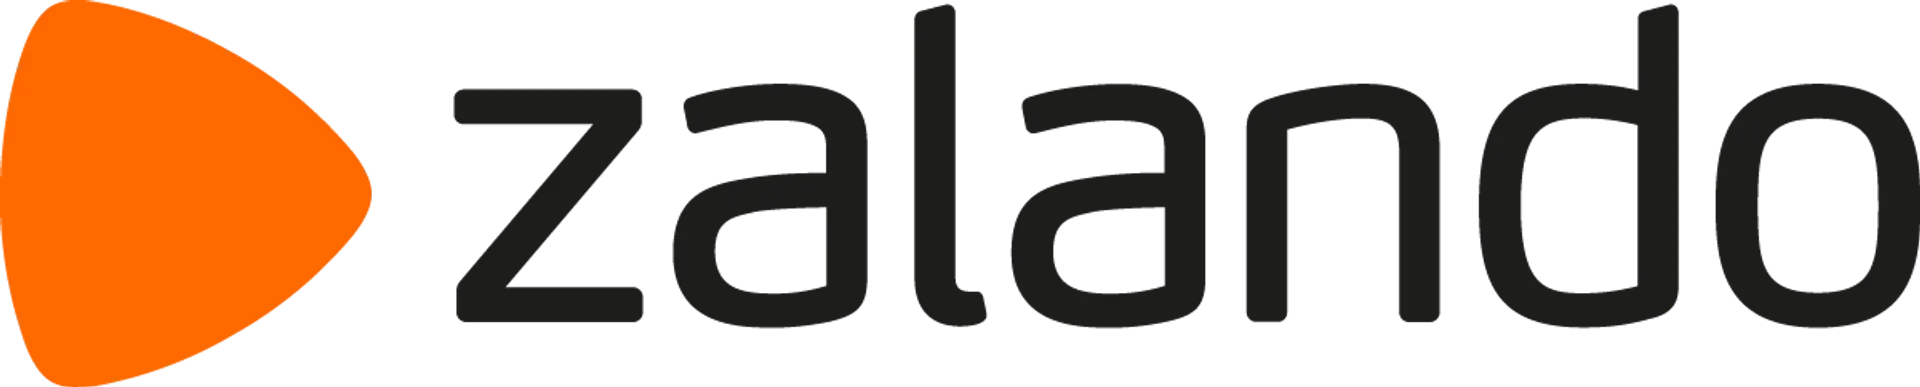 ZALANDO logo de catálogo